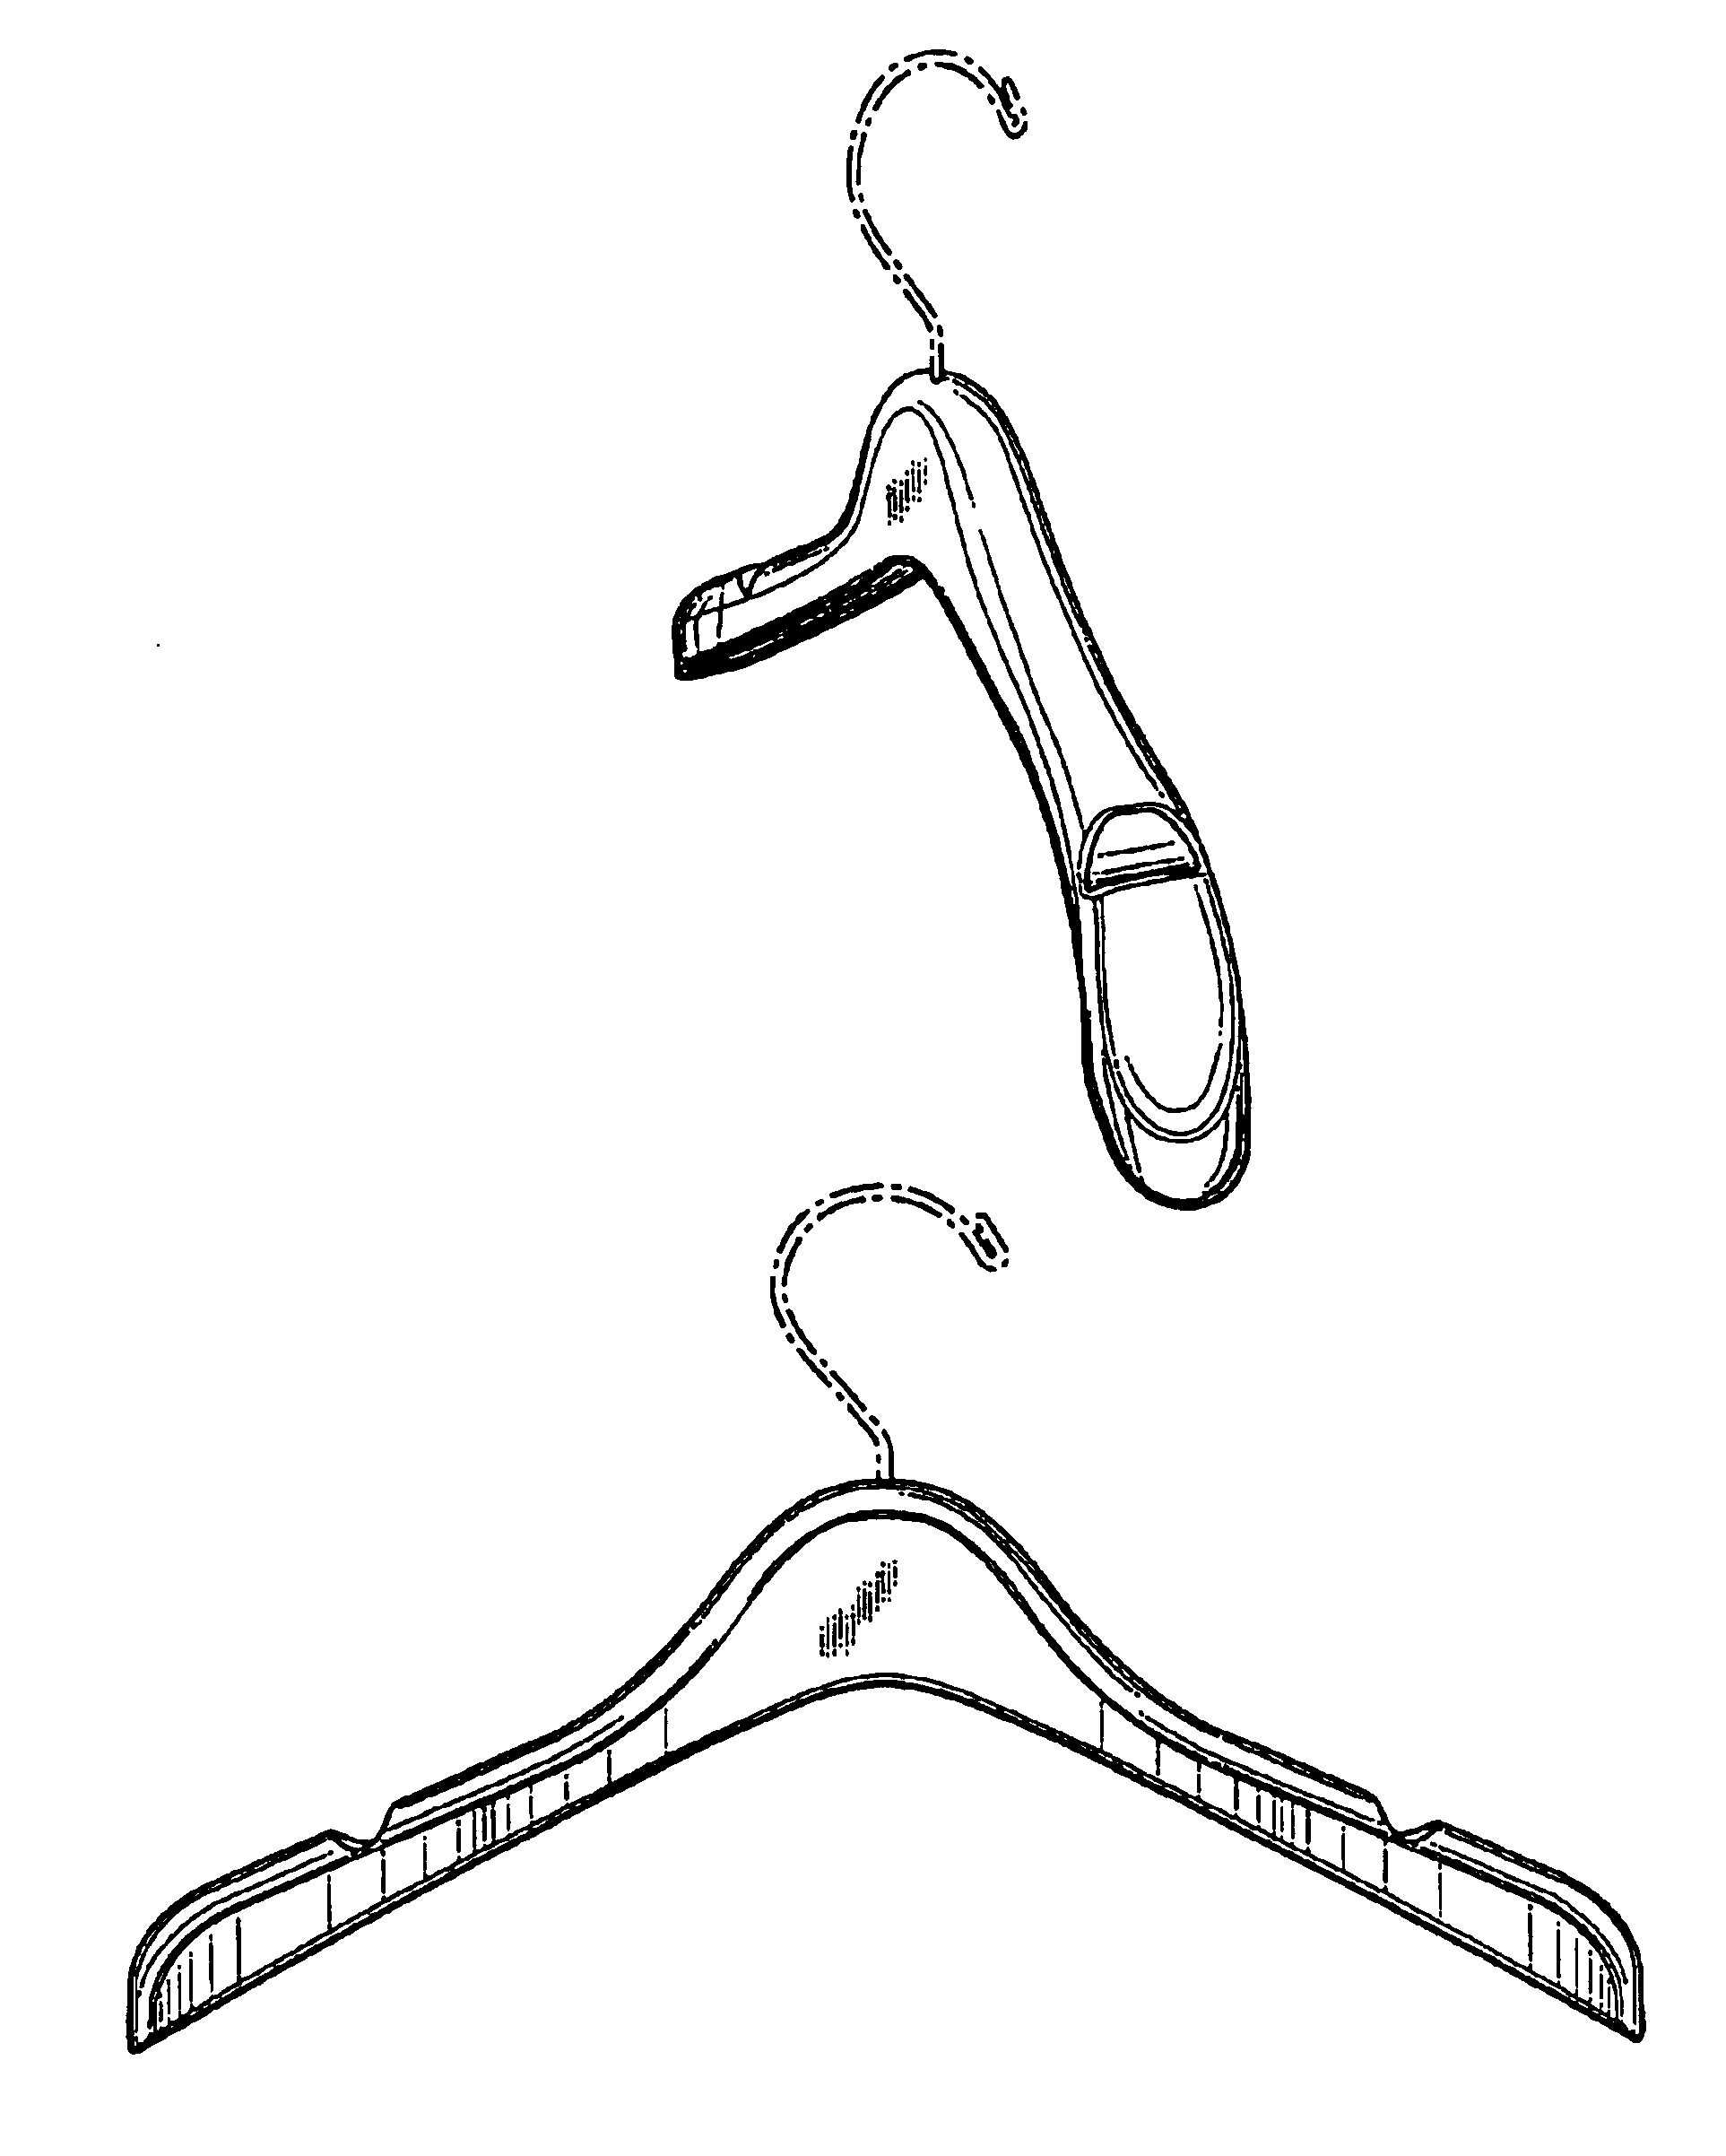 Clothes hanger body - Hanger Corporation